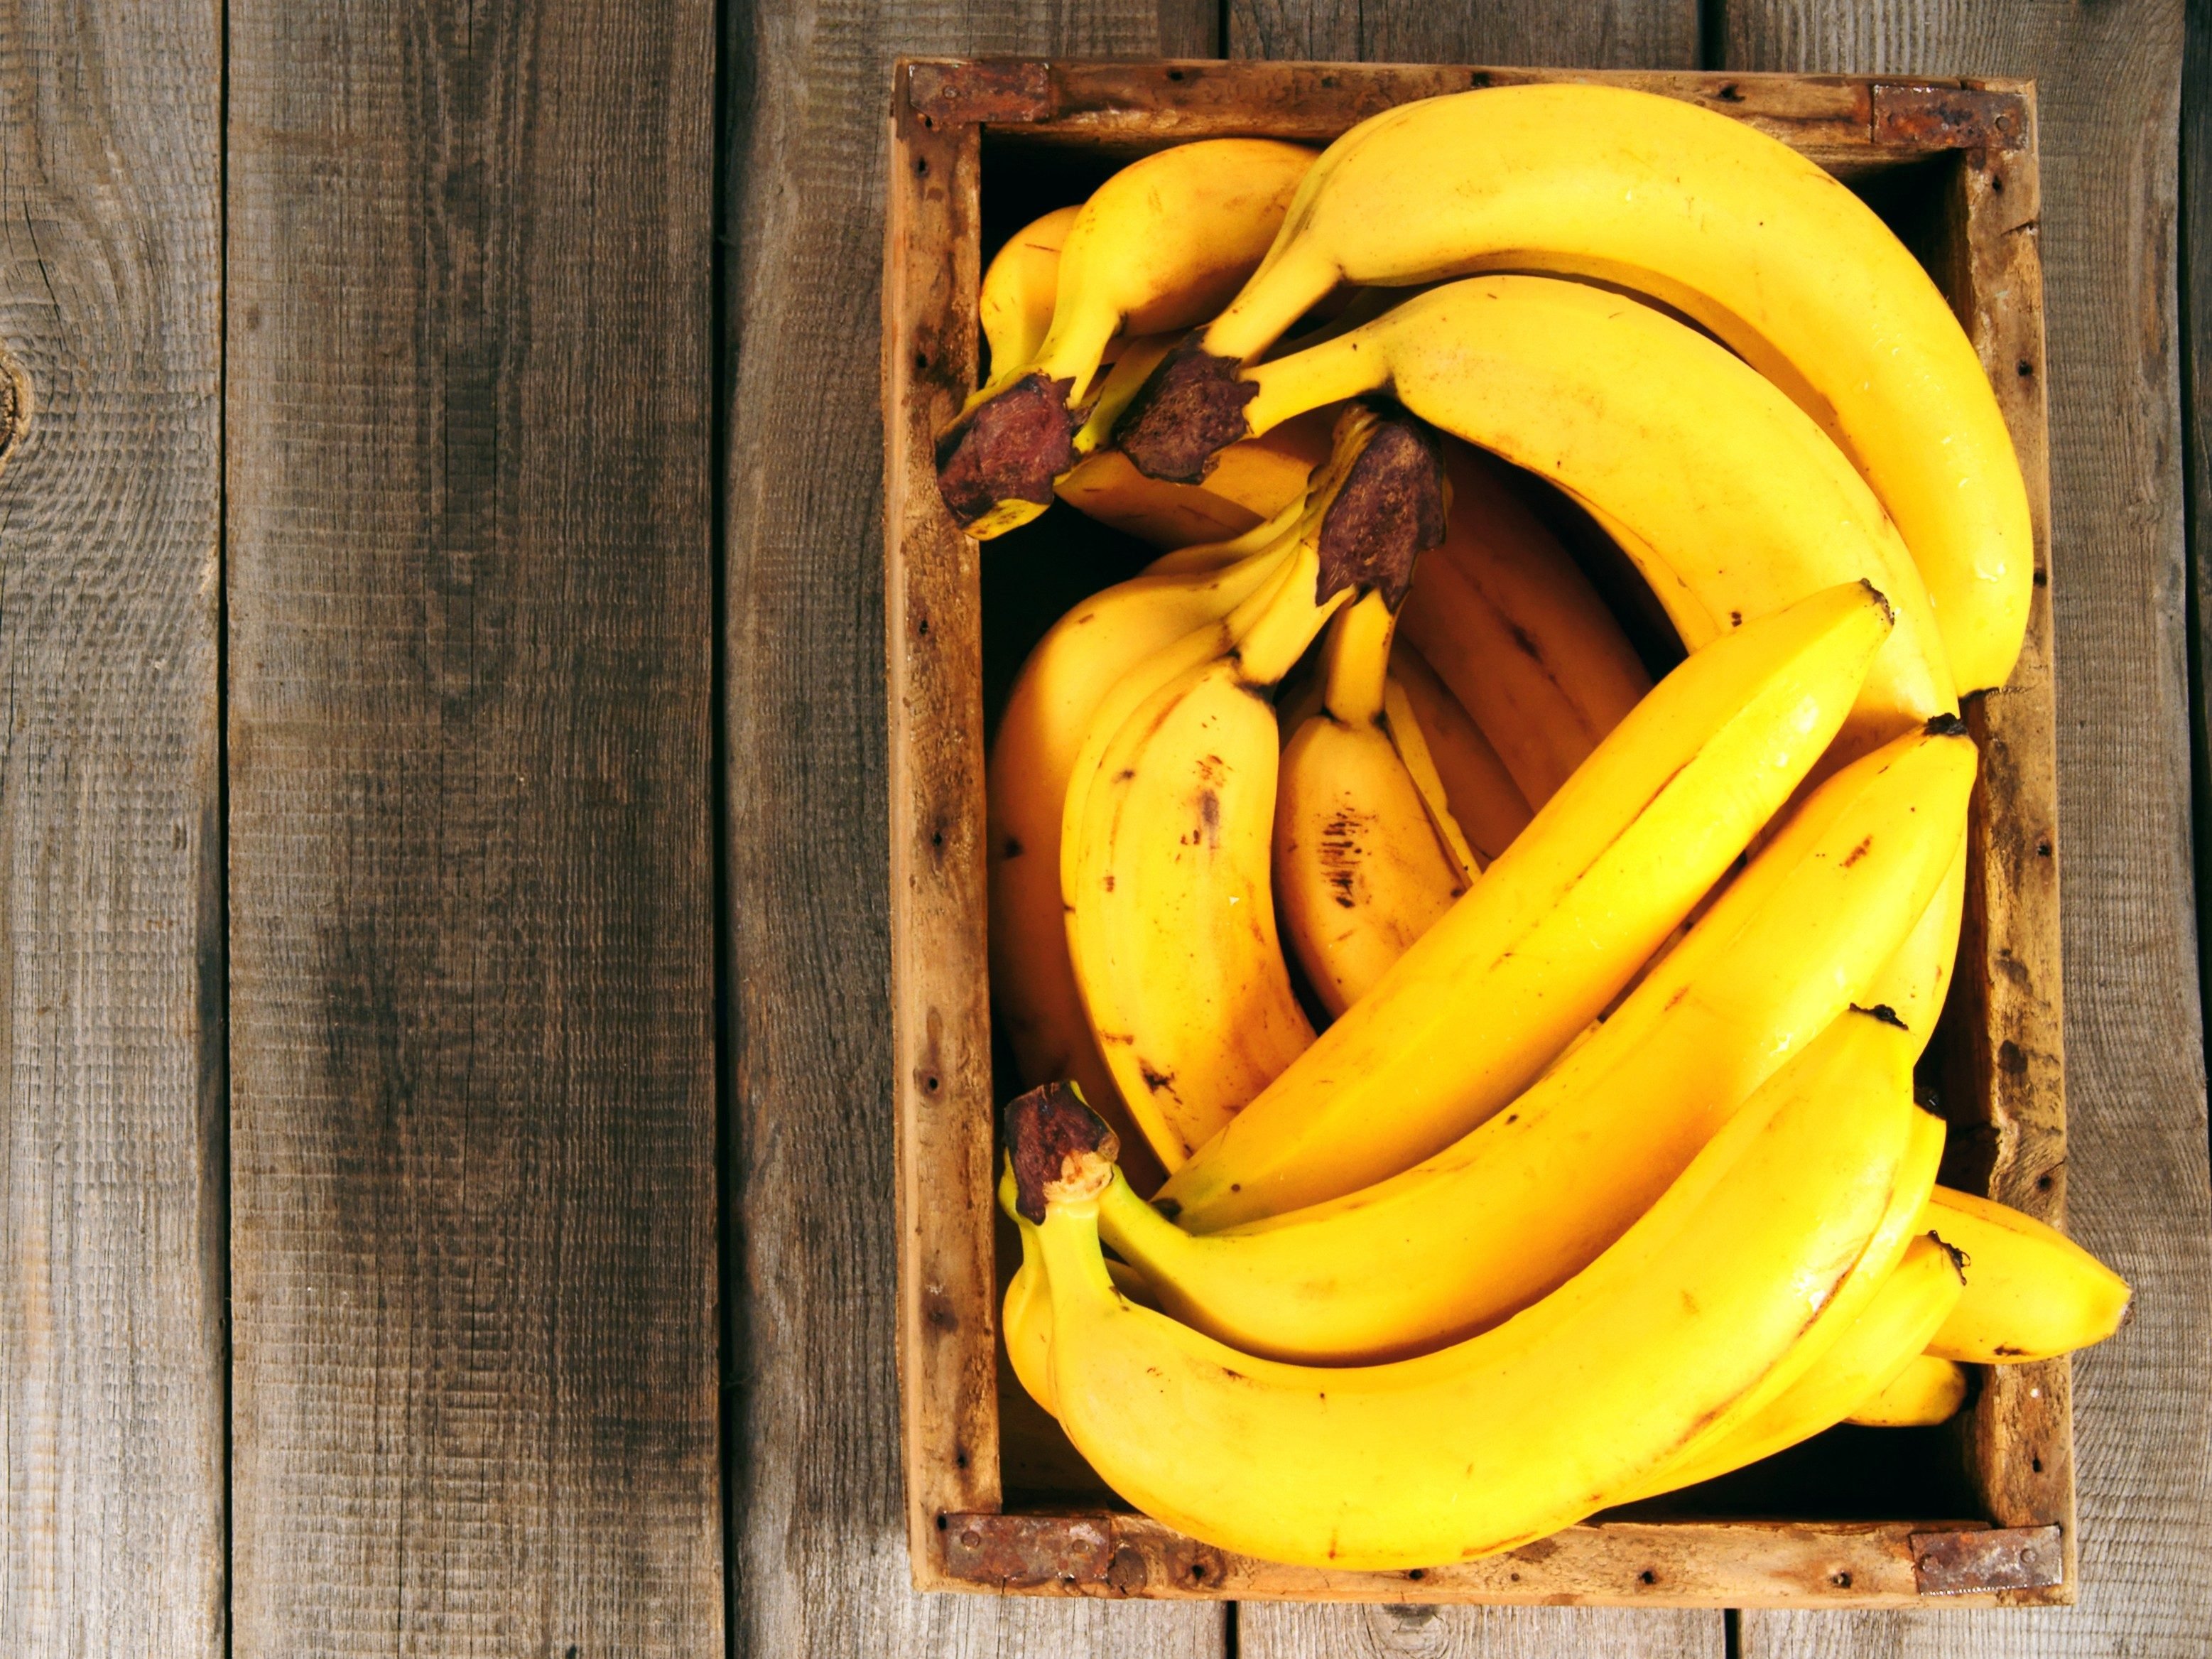 ÎÏÎ¿ÏÎ­Î»ÎµÏÎ¼Î± ÎµÎ¹ÎºÏÎ½Î±Ï Î³Î¹Î± banana use